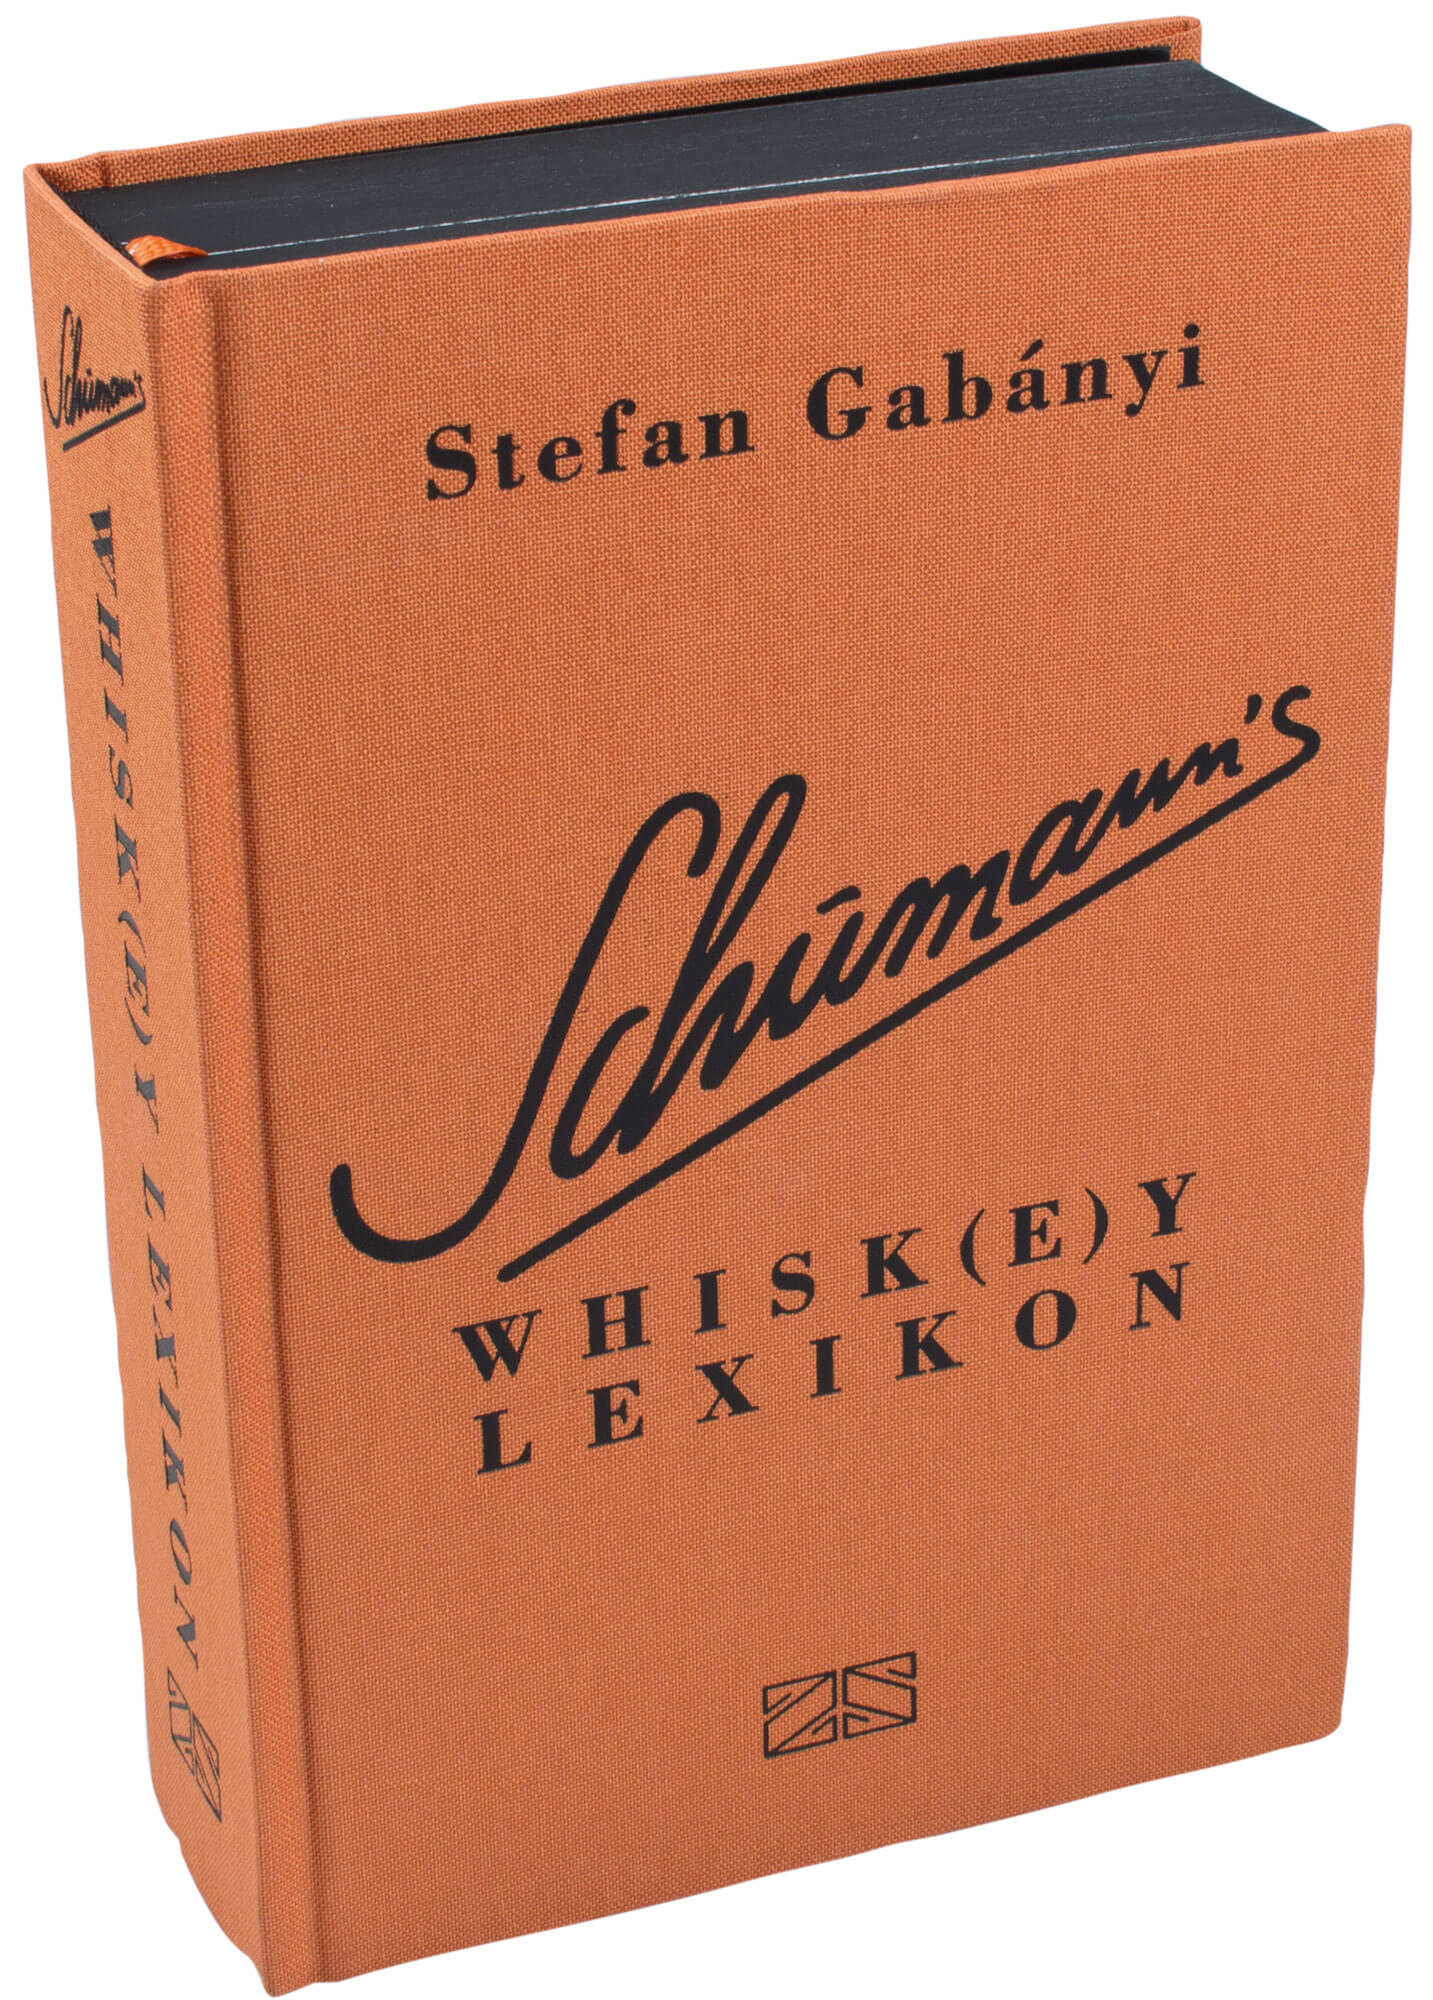 Whisk(e)y Lexikon - Charles Schumann/Stefan Gabányi